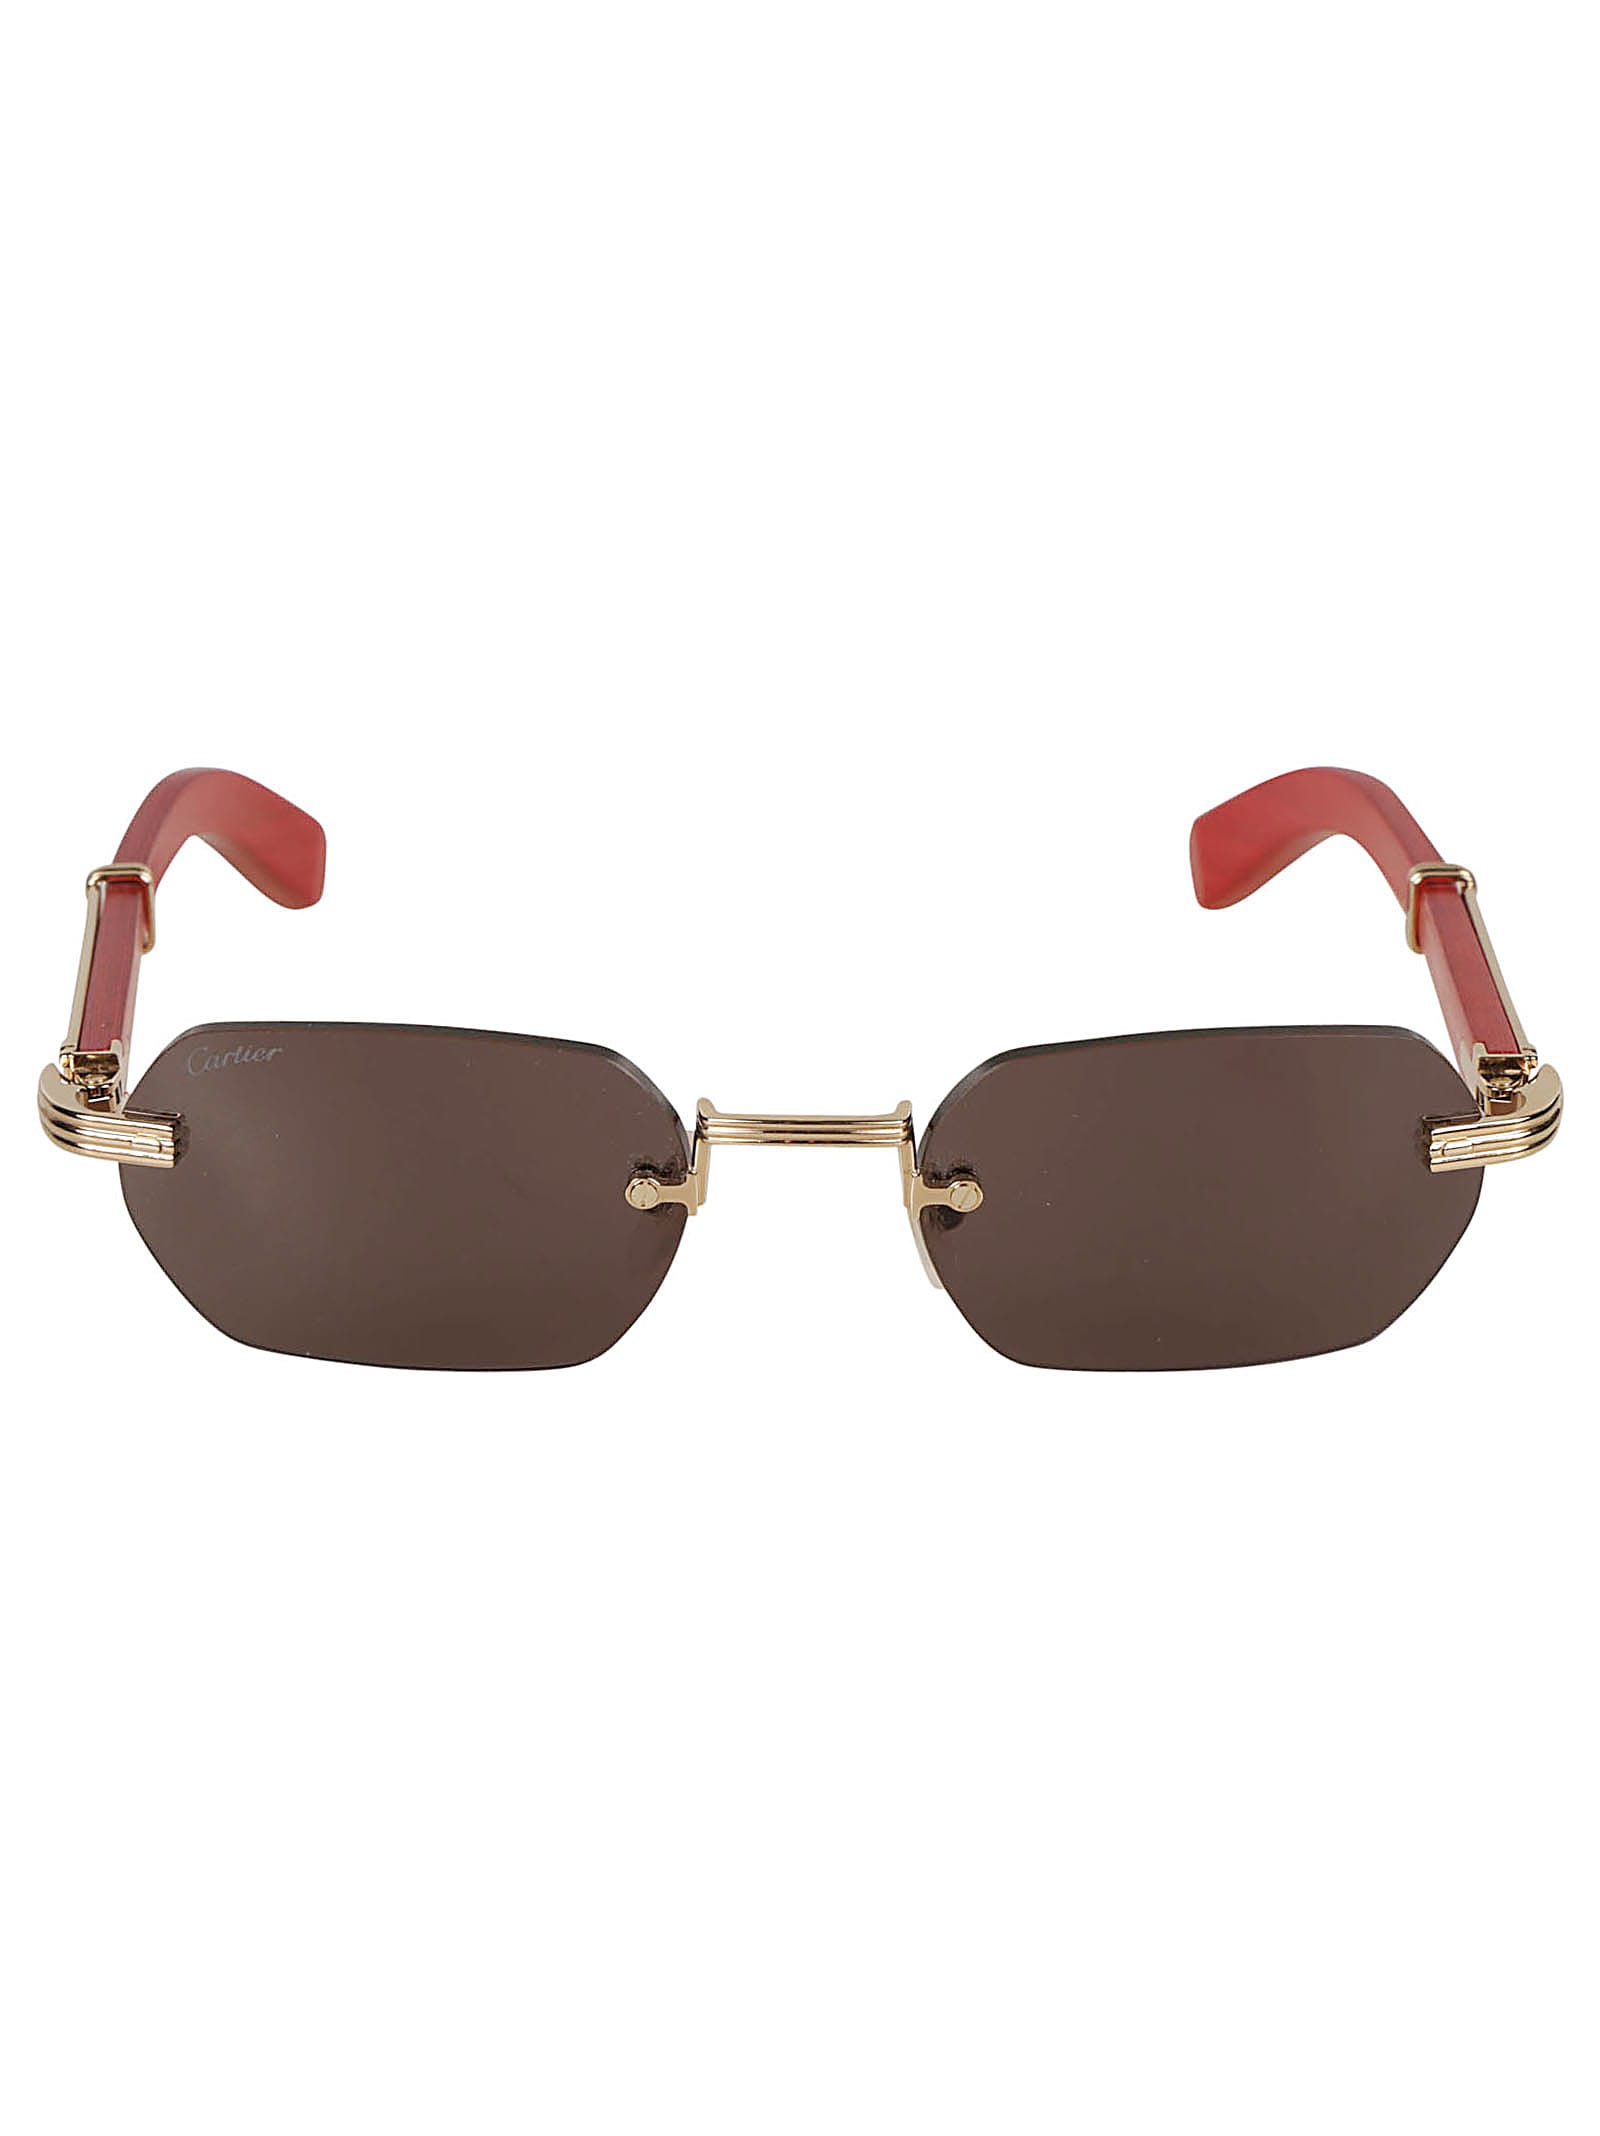 Cartier Hexagon Frame-less Sunglasses Sunglasses In Gold